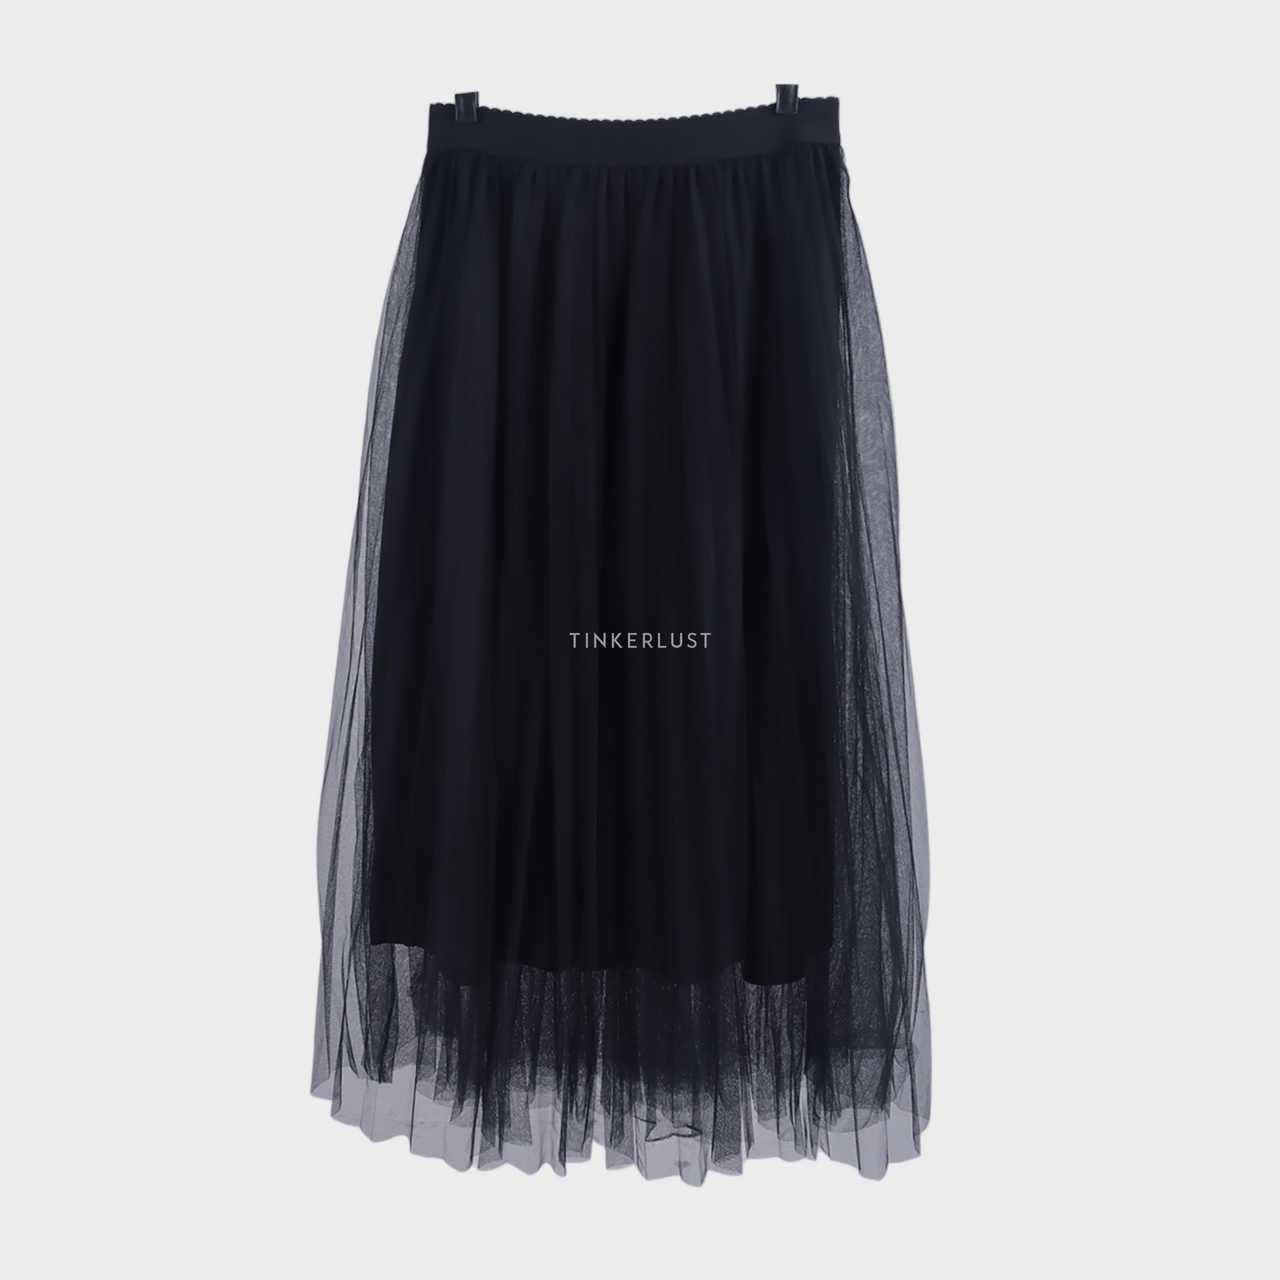 Shein Black Maxi Skirt